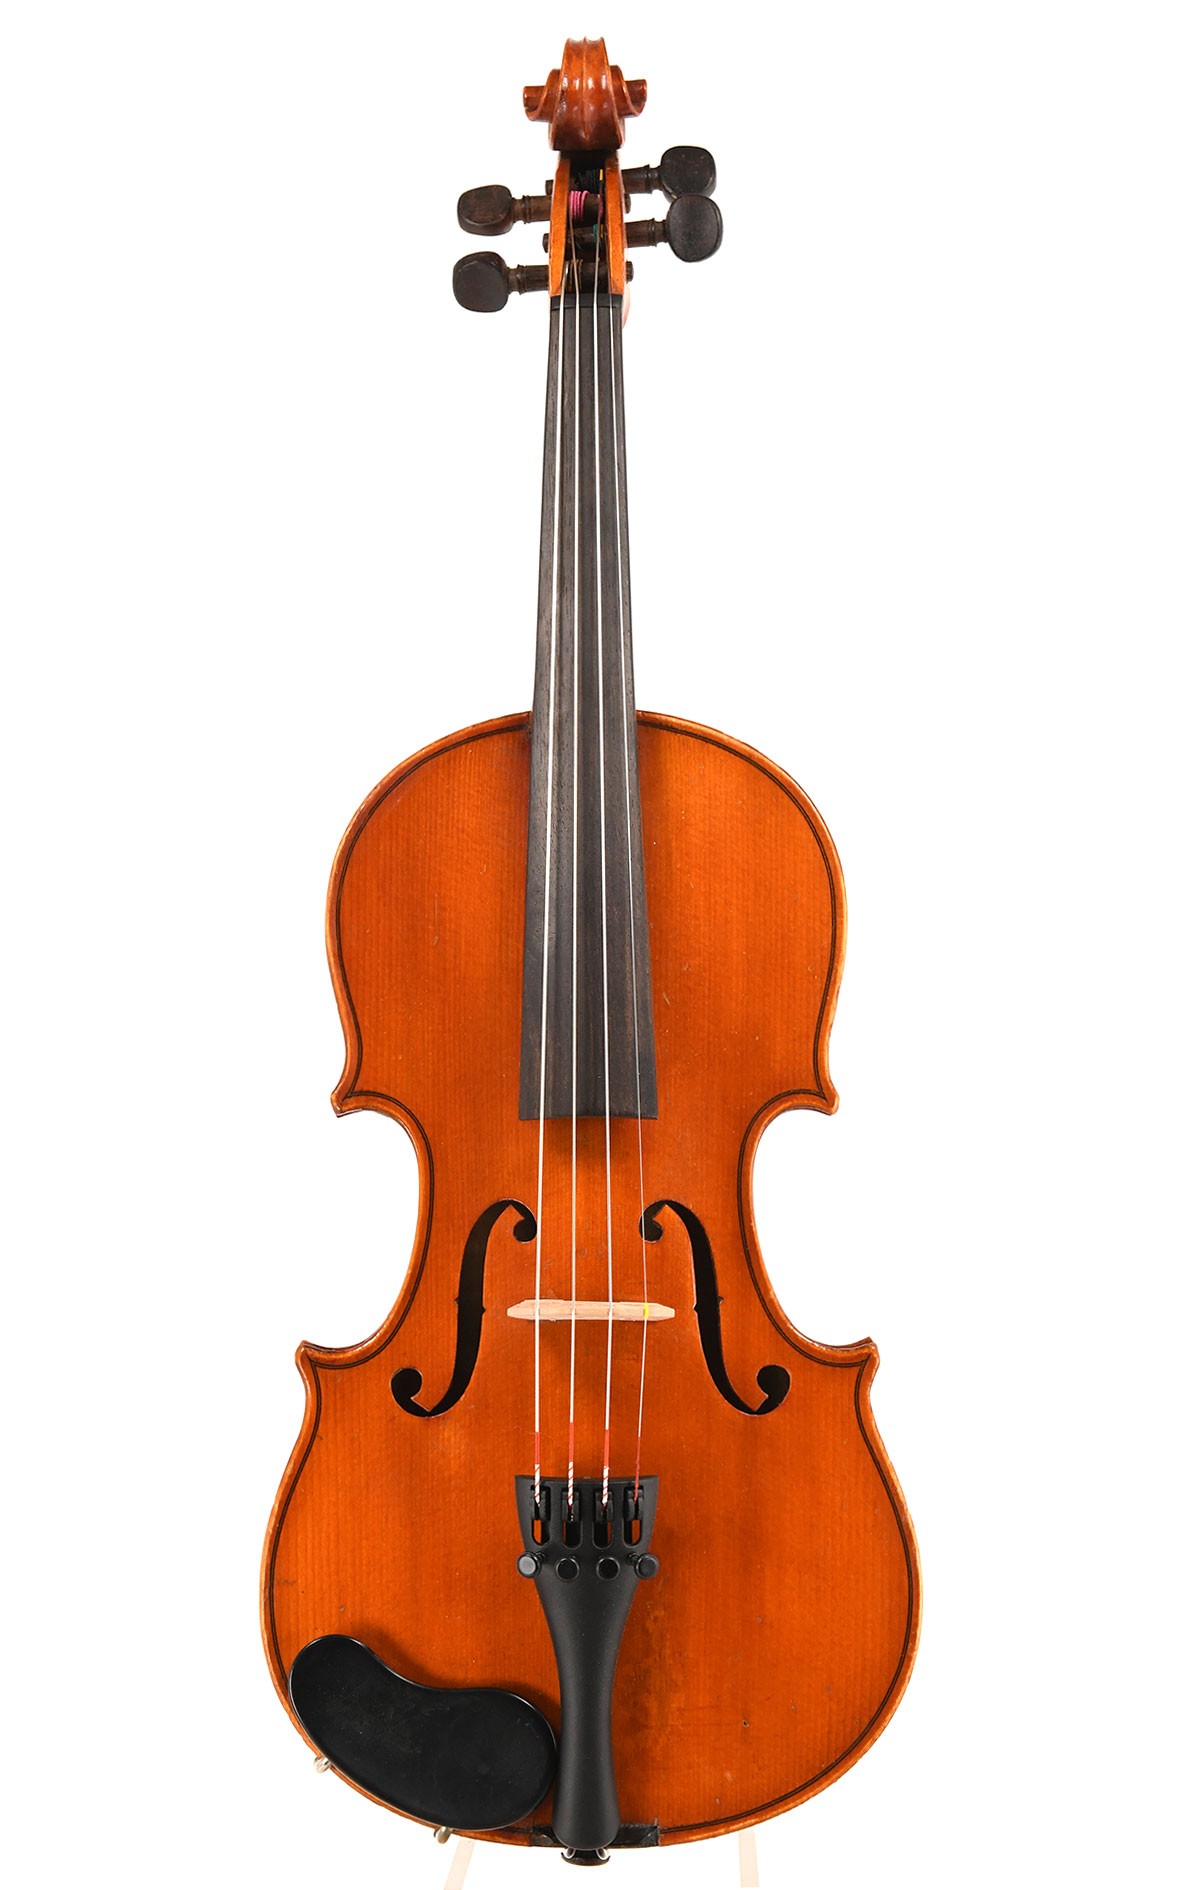 Petite French 1/2 violin, or large 1/4 violin (intermediate size)